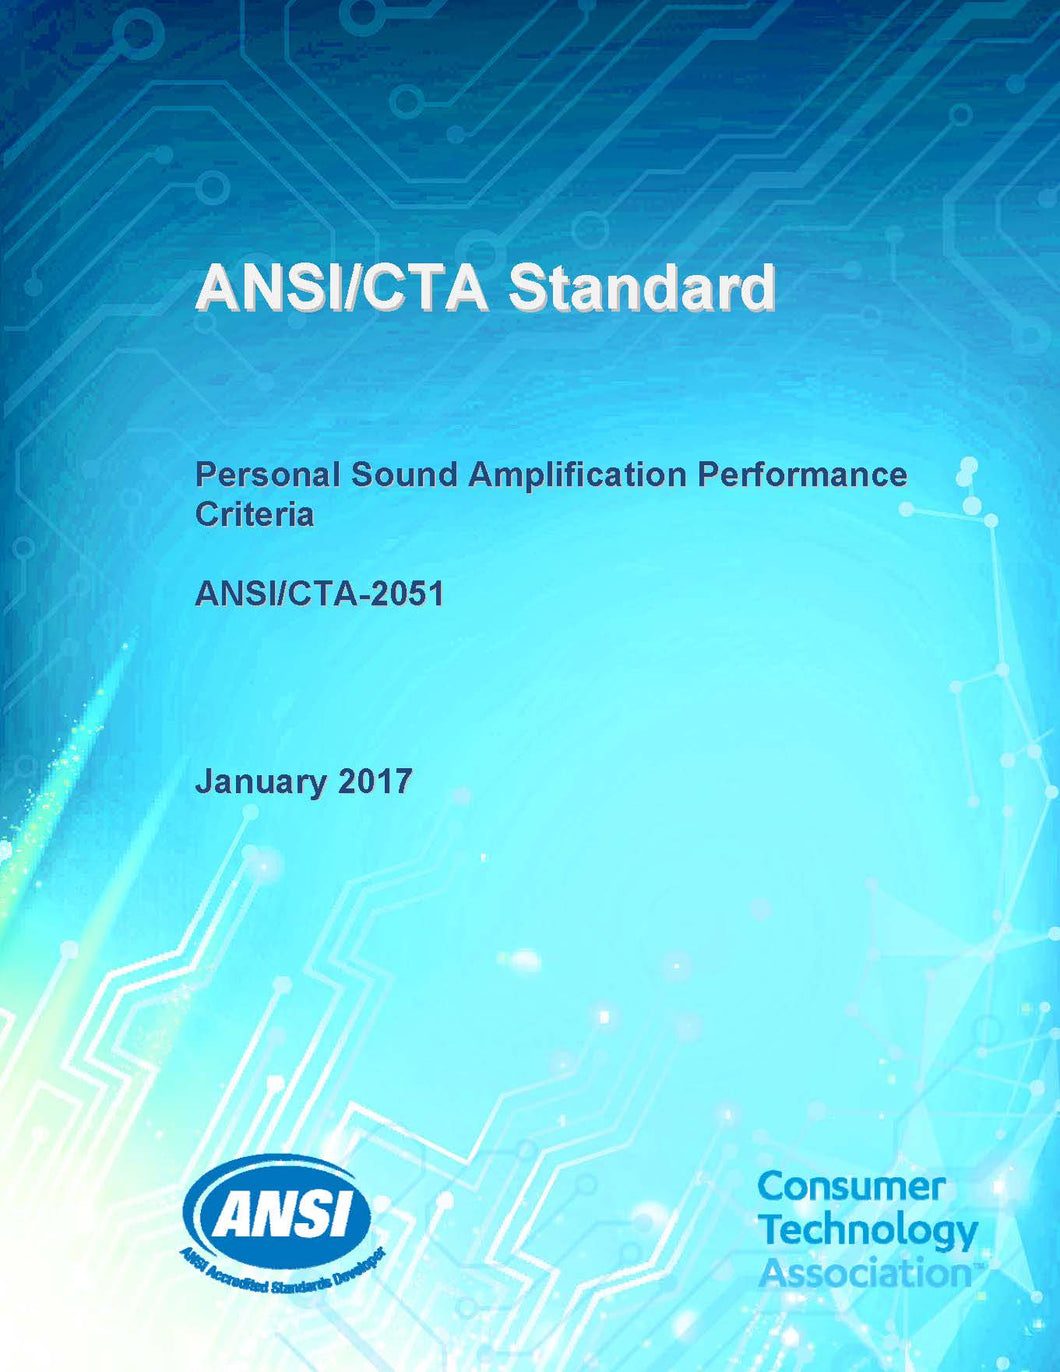 Personal Sound Amplification Performance Criteria (ANSI/CTA-2051)